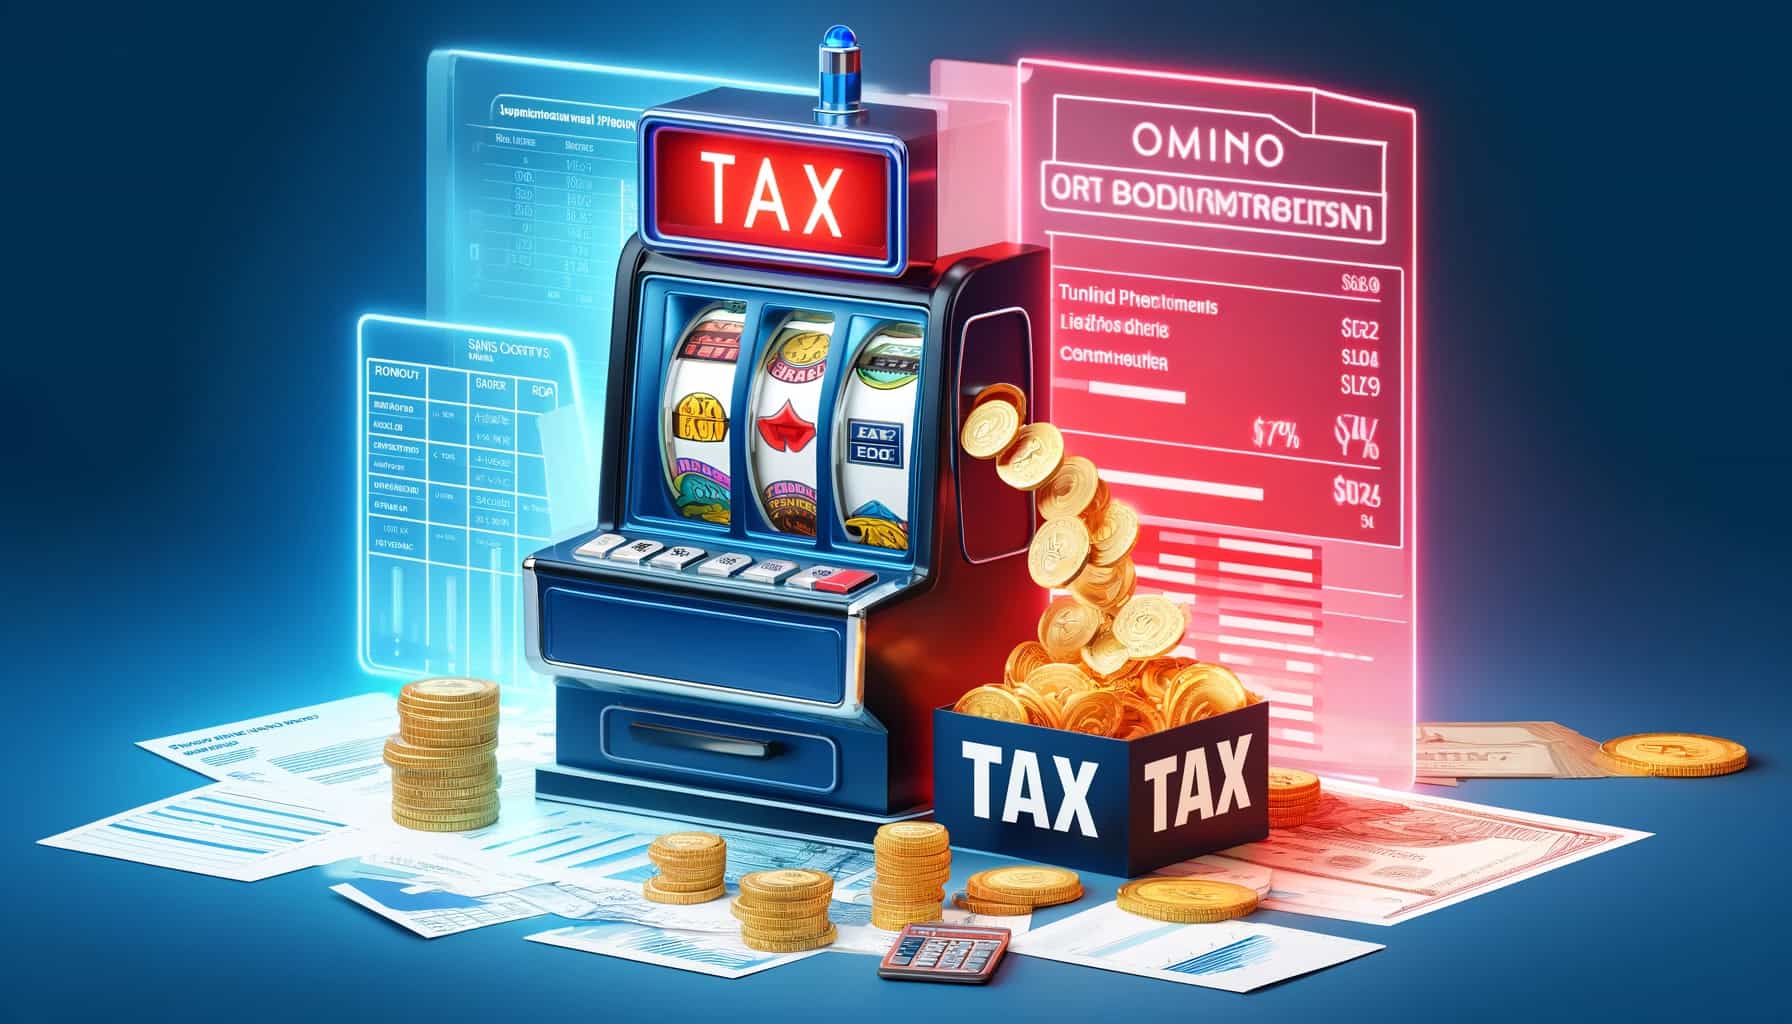 Slot machine with taxes on profits